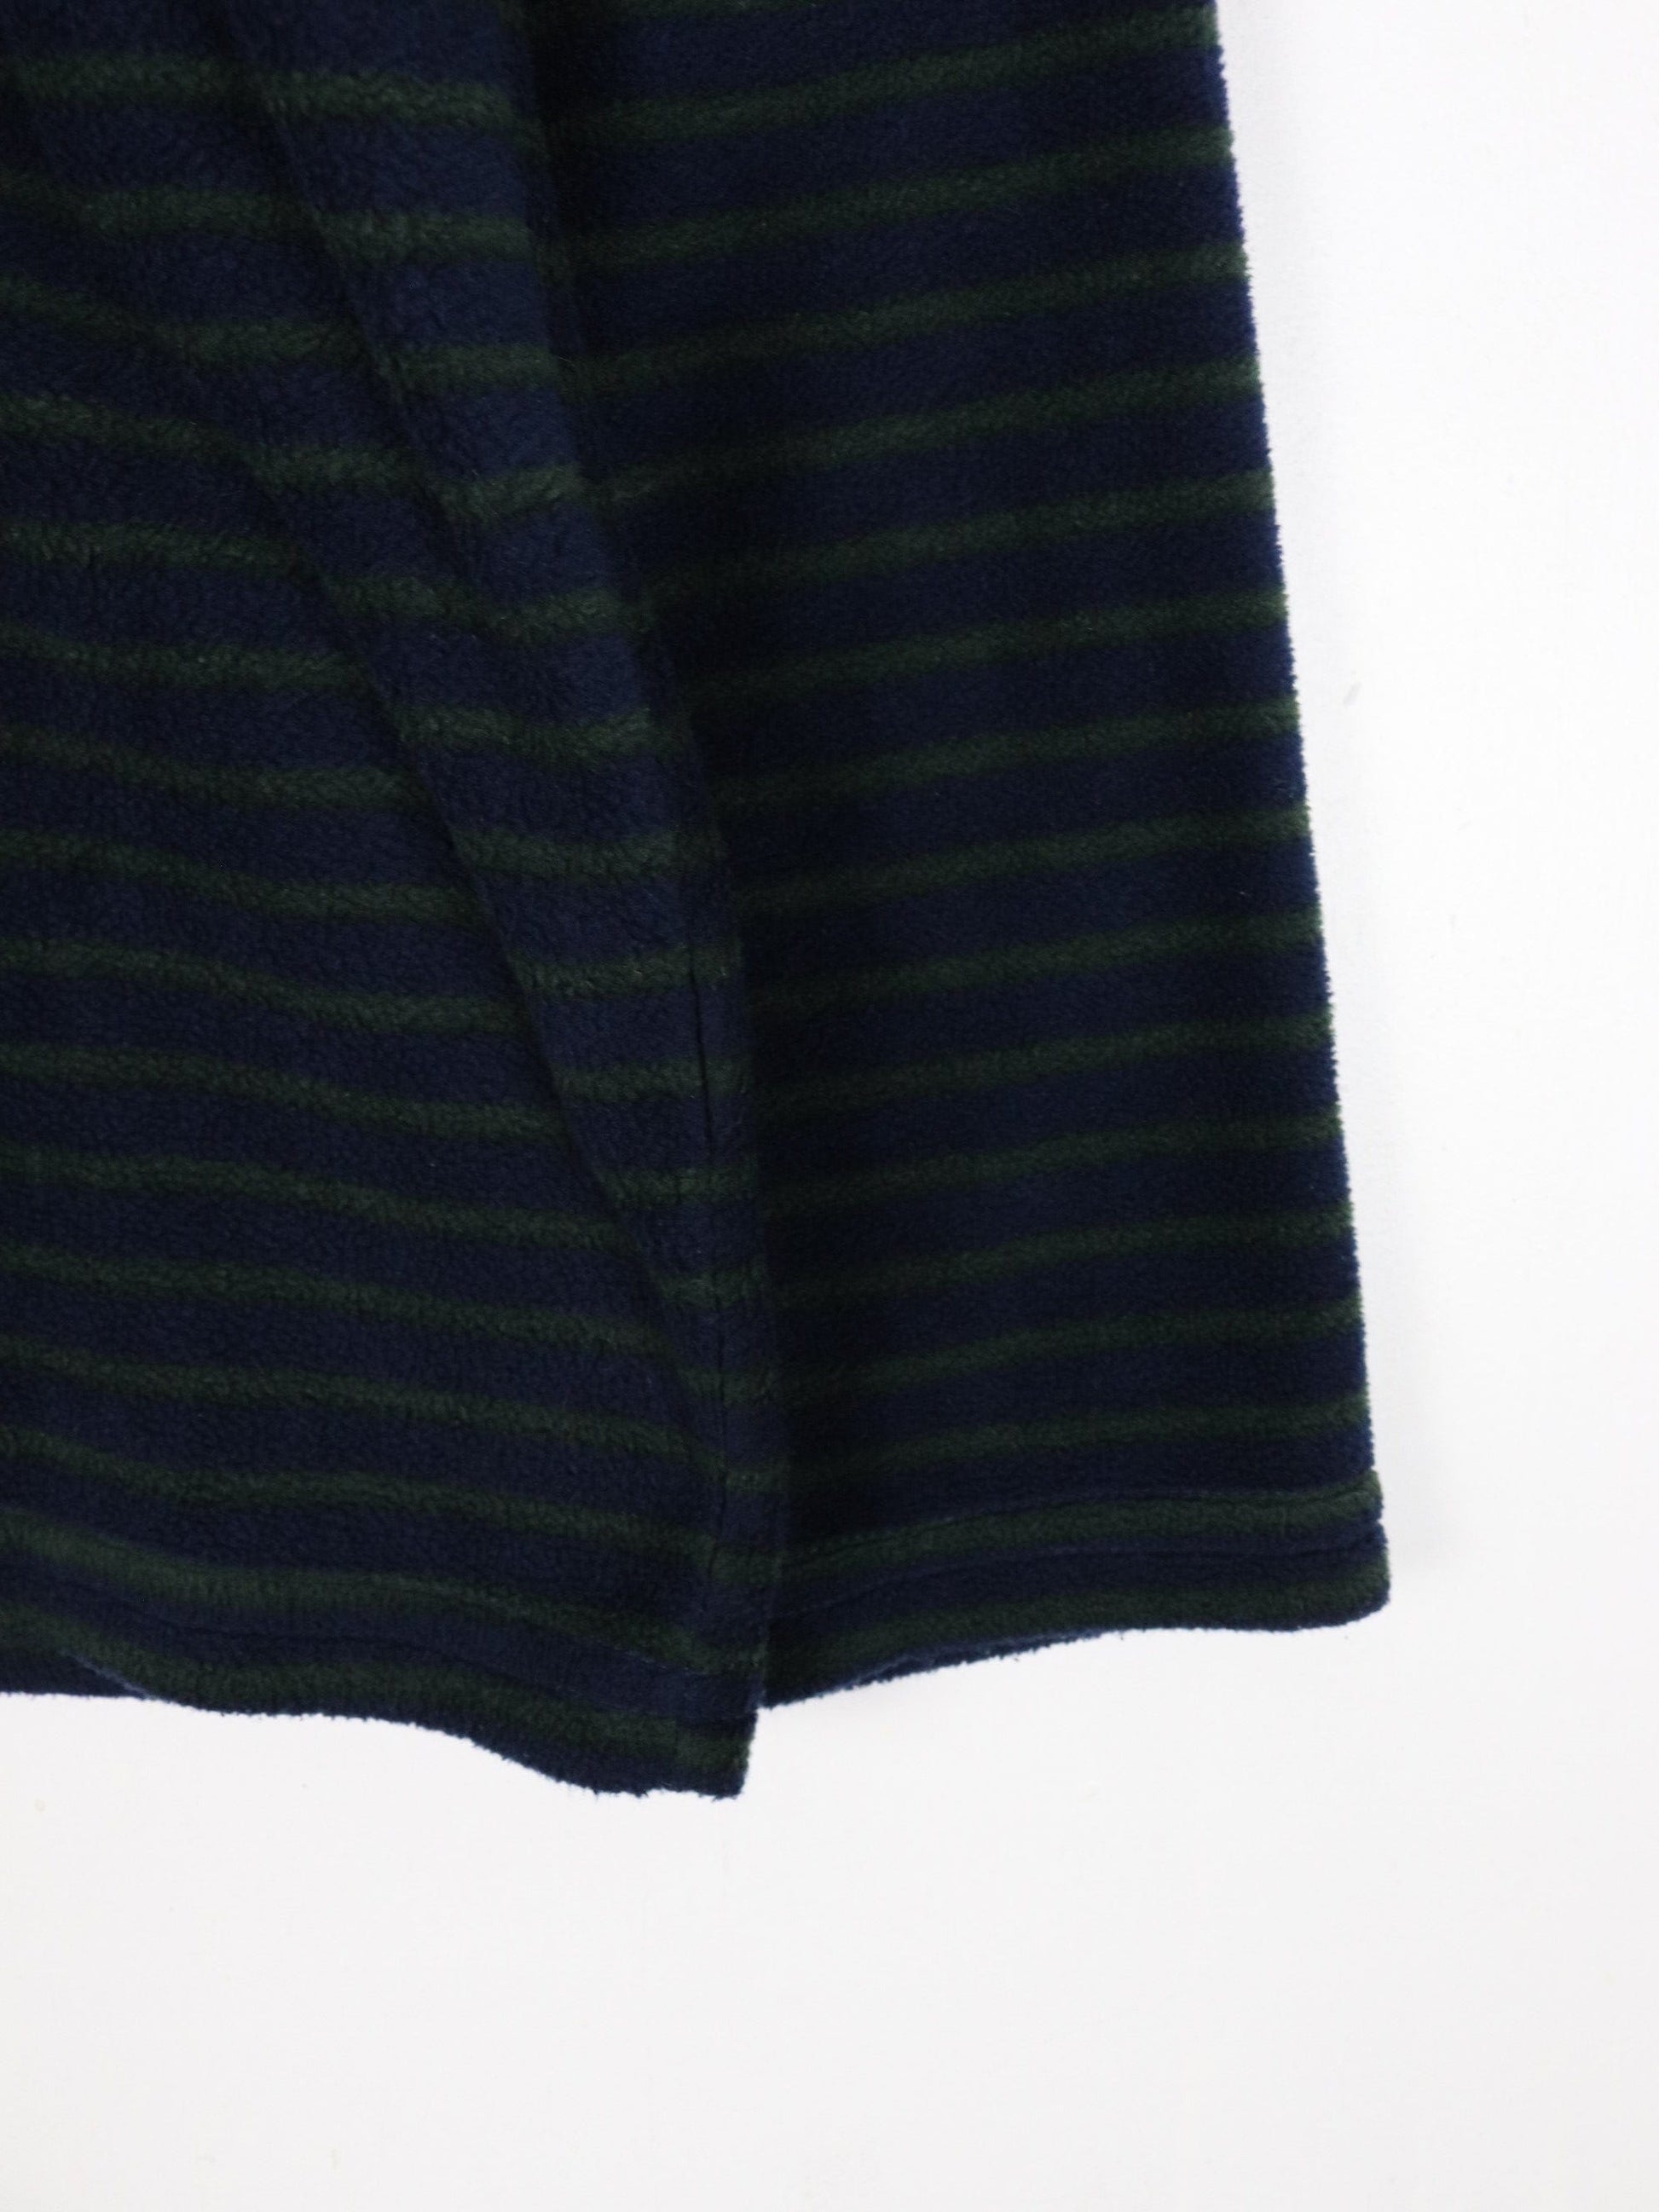 Other Sweatshirts & Hoodies Fleece Sweater Shirt Womens Large Blue Striped Turtle Neck